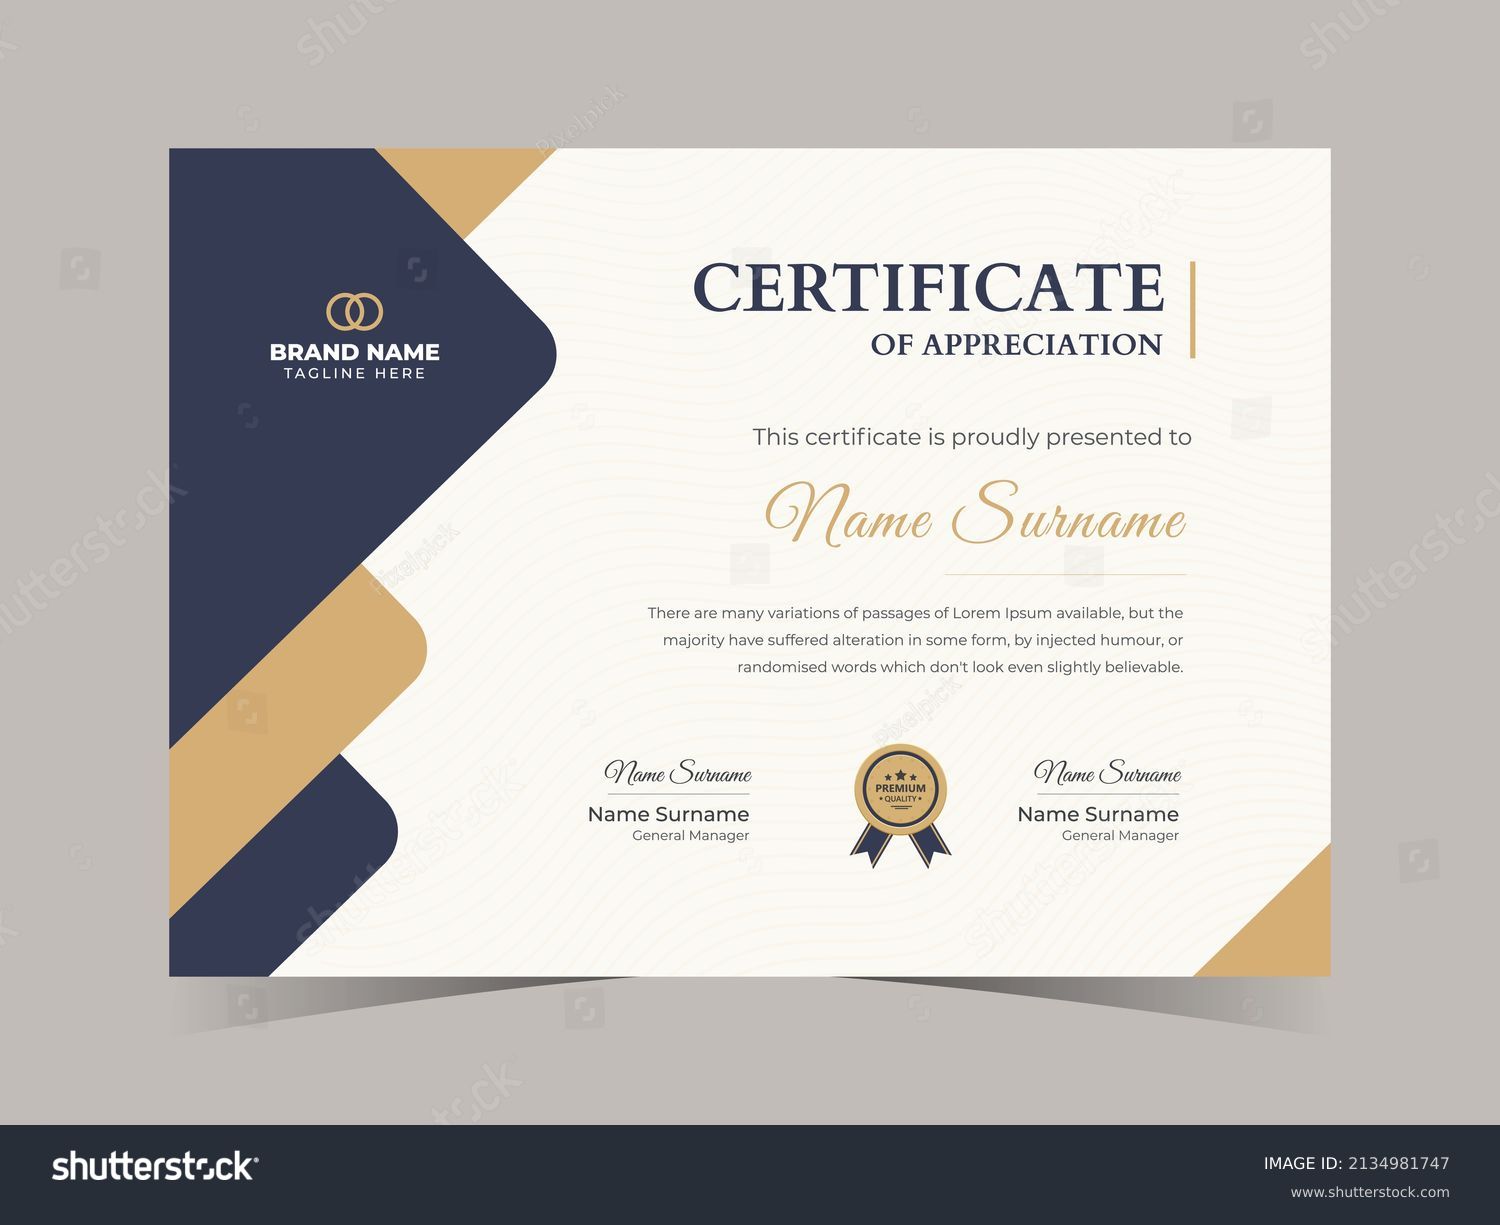 Appreciation and Achievement Certificate Template Design, Clean modern certificate, Diploma Certificate vector template, achievement certificate with badge. #2134981747